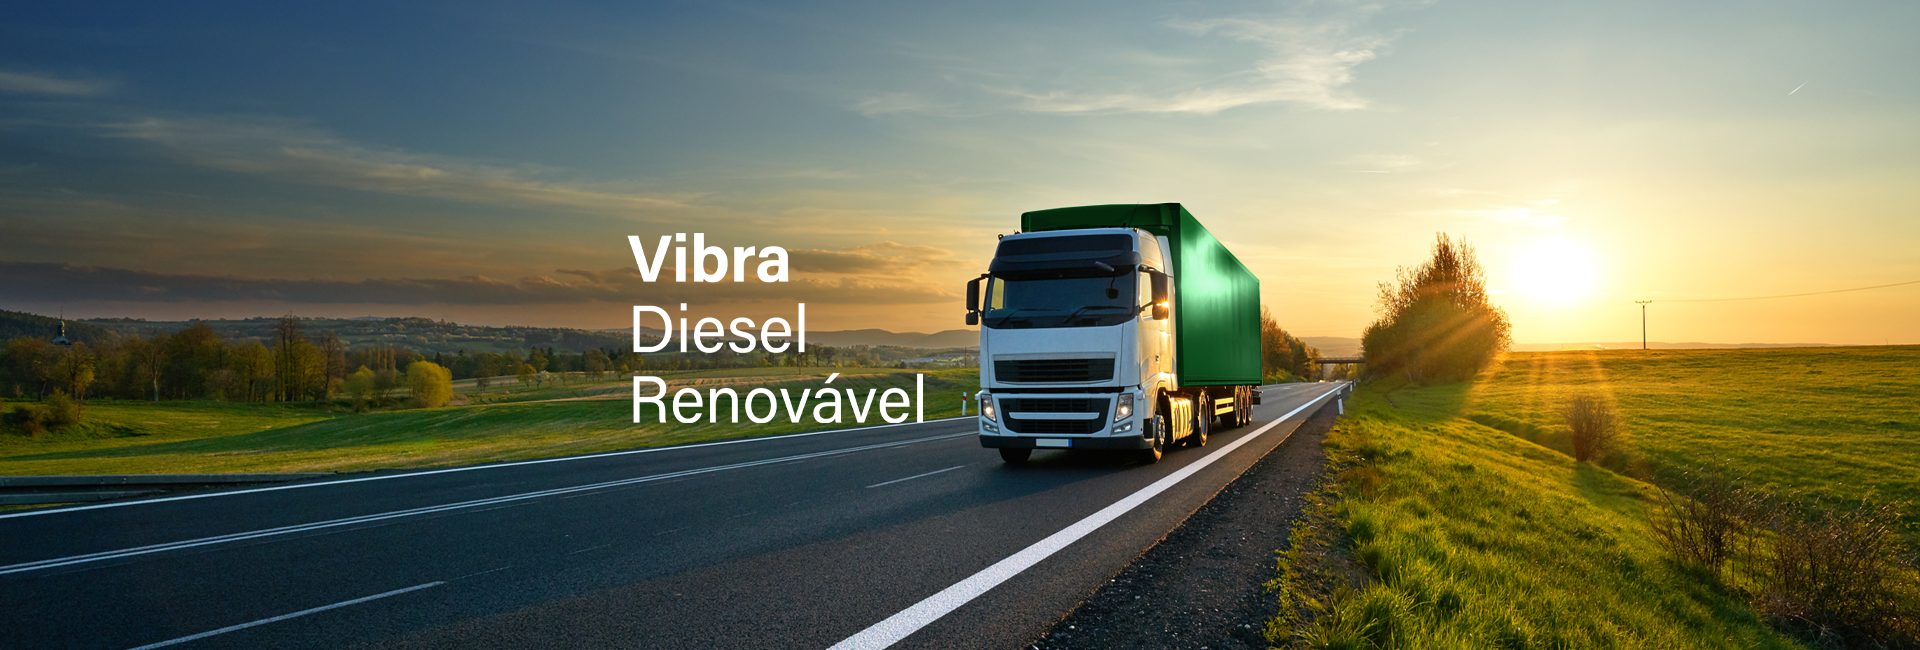 Vibra Diesel Renovável